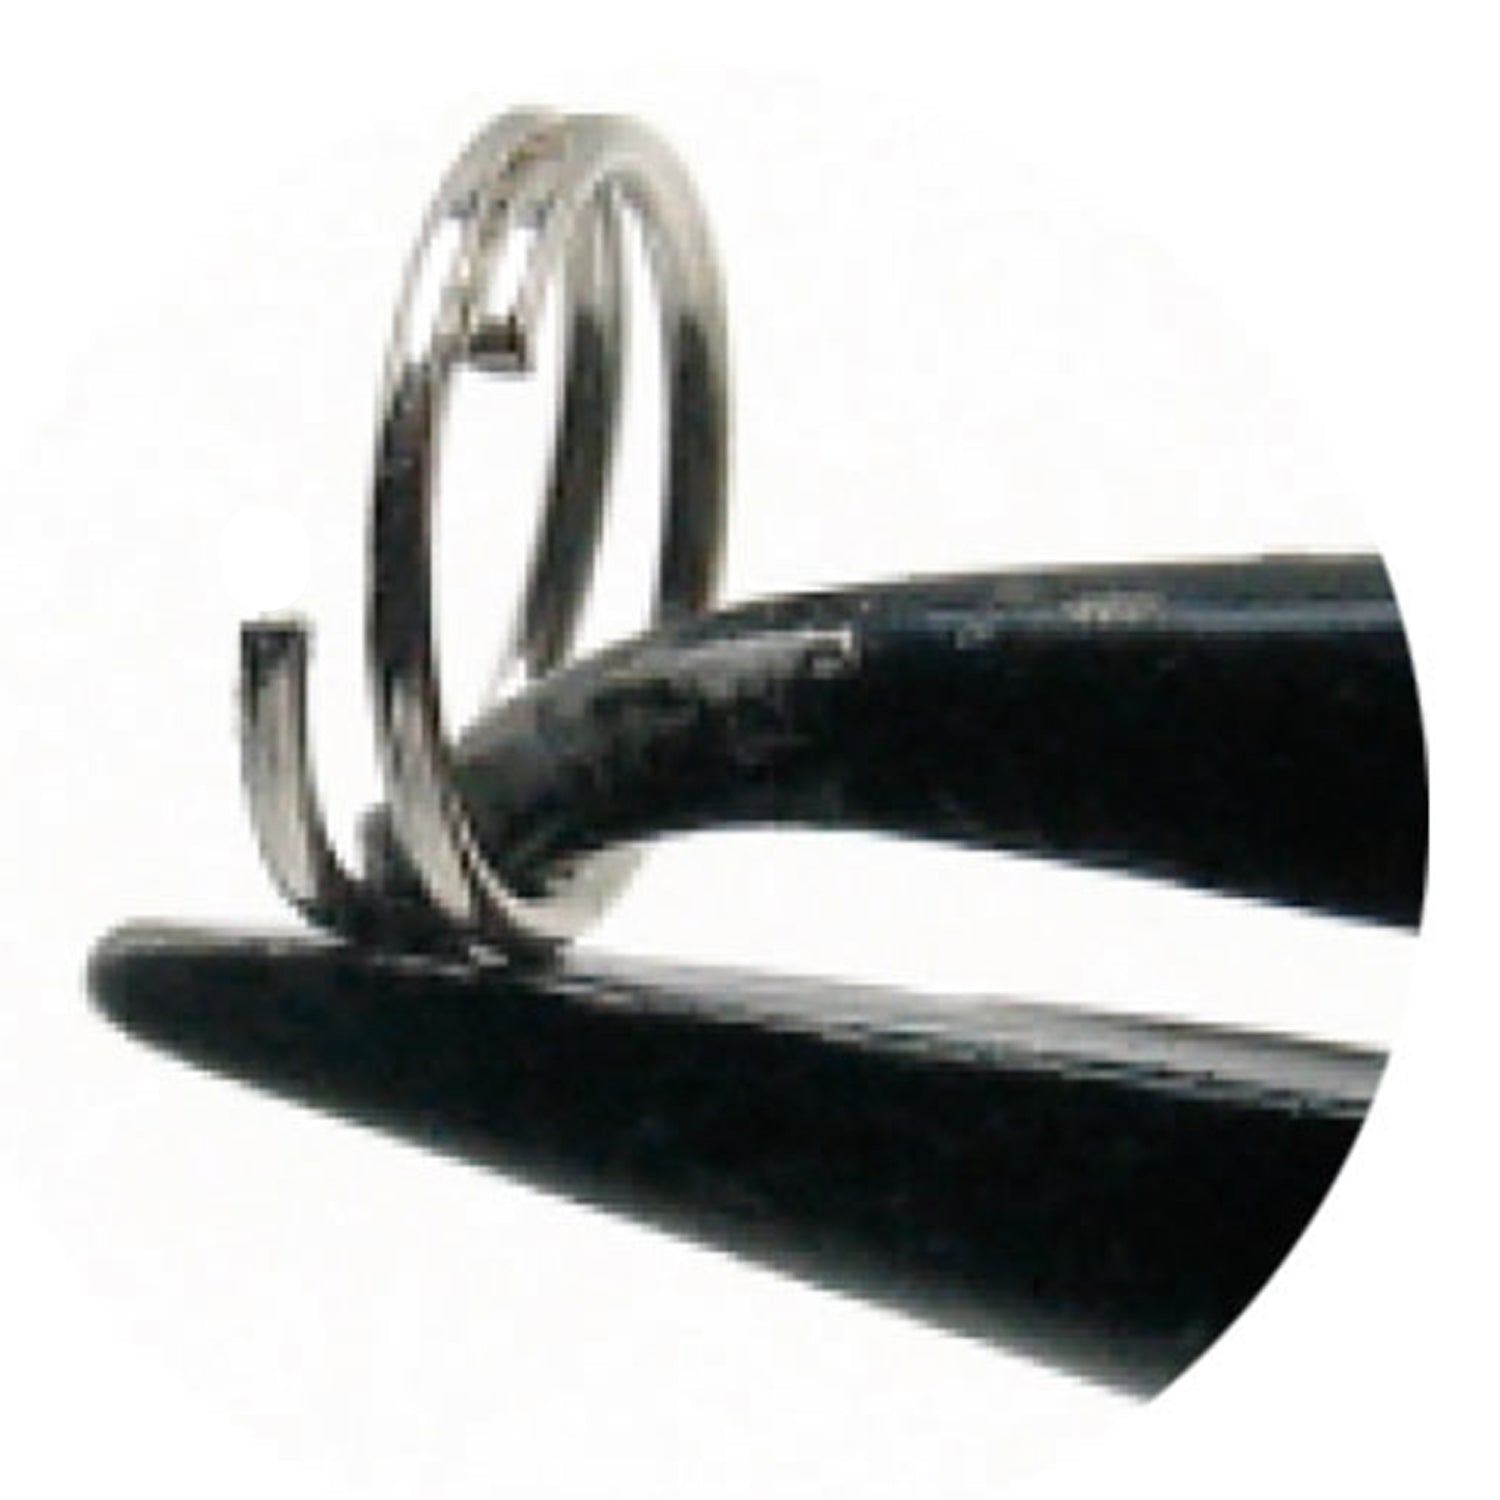 SPLIT RING PLIERS Opener / Splitter (Saves your fingernails) Jewelry Craft  TOOL | eBay